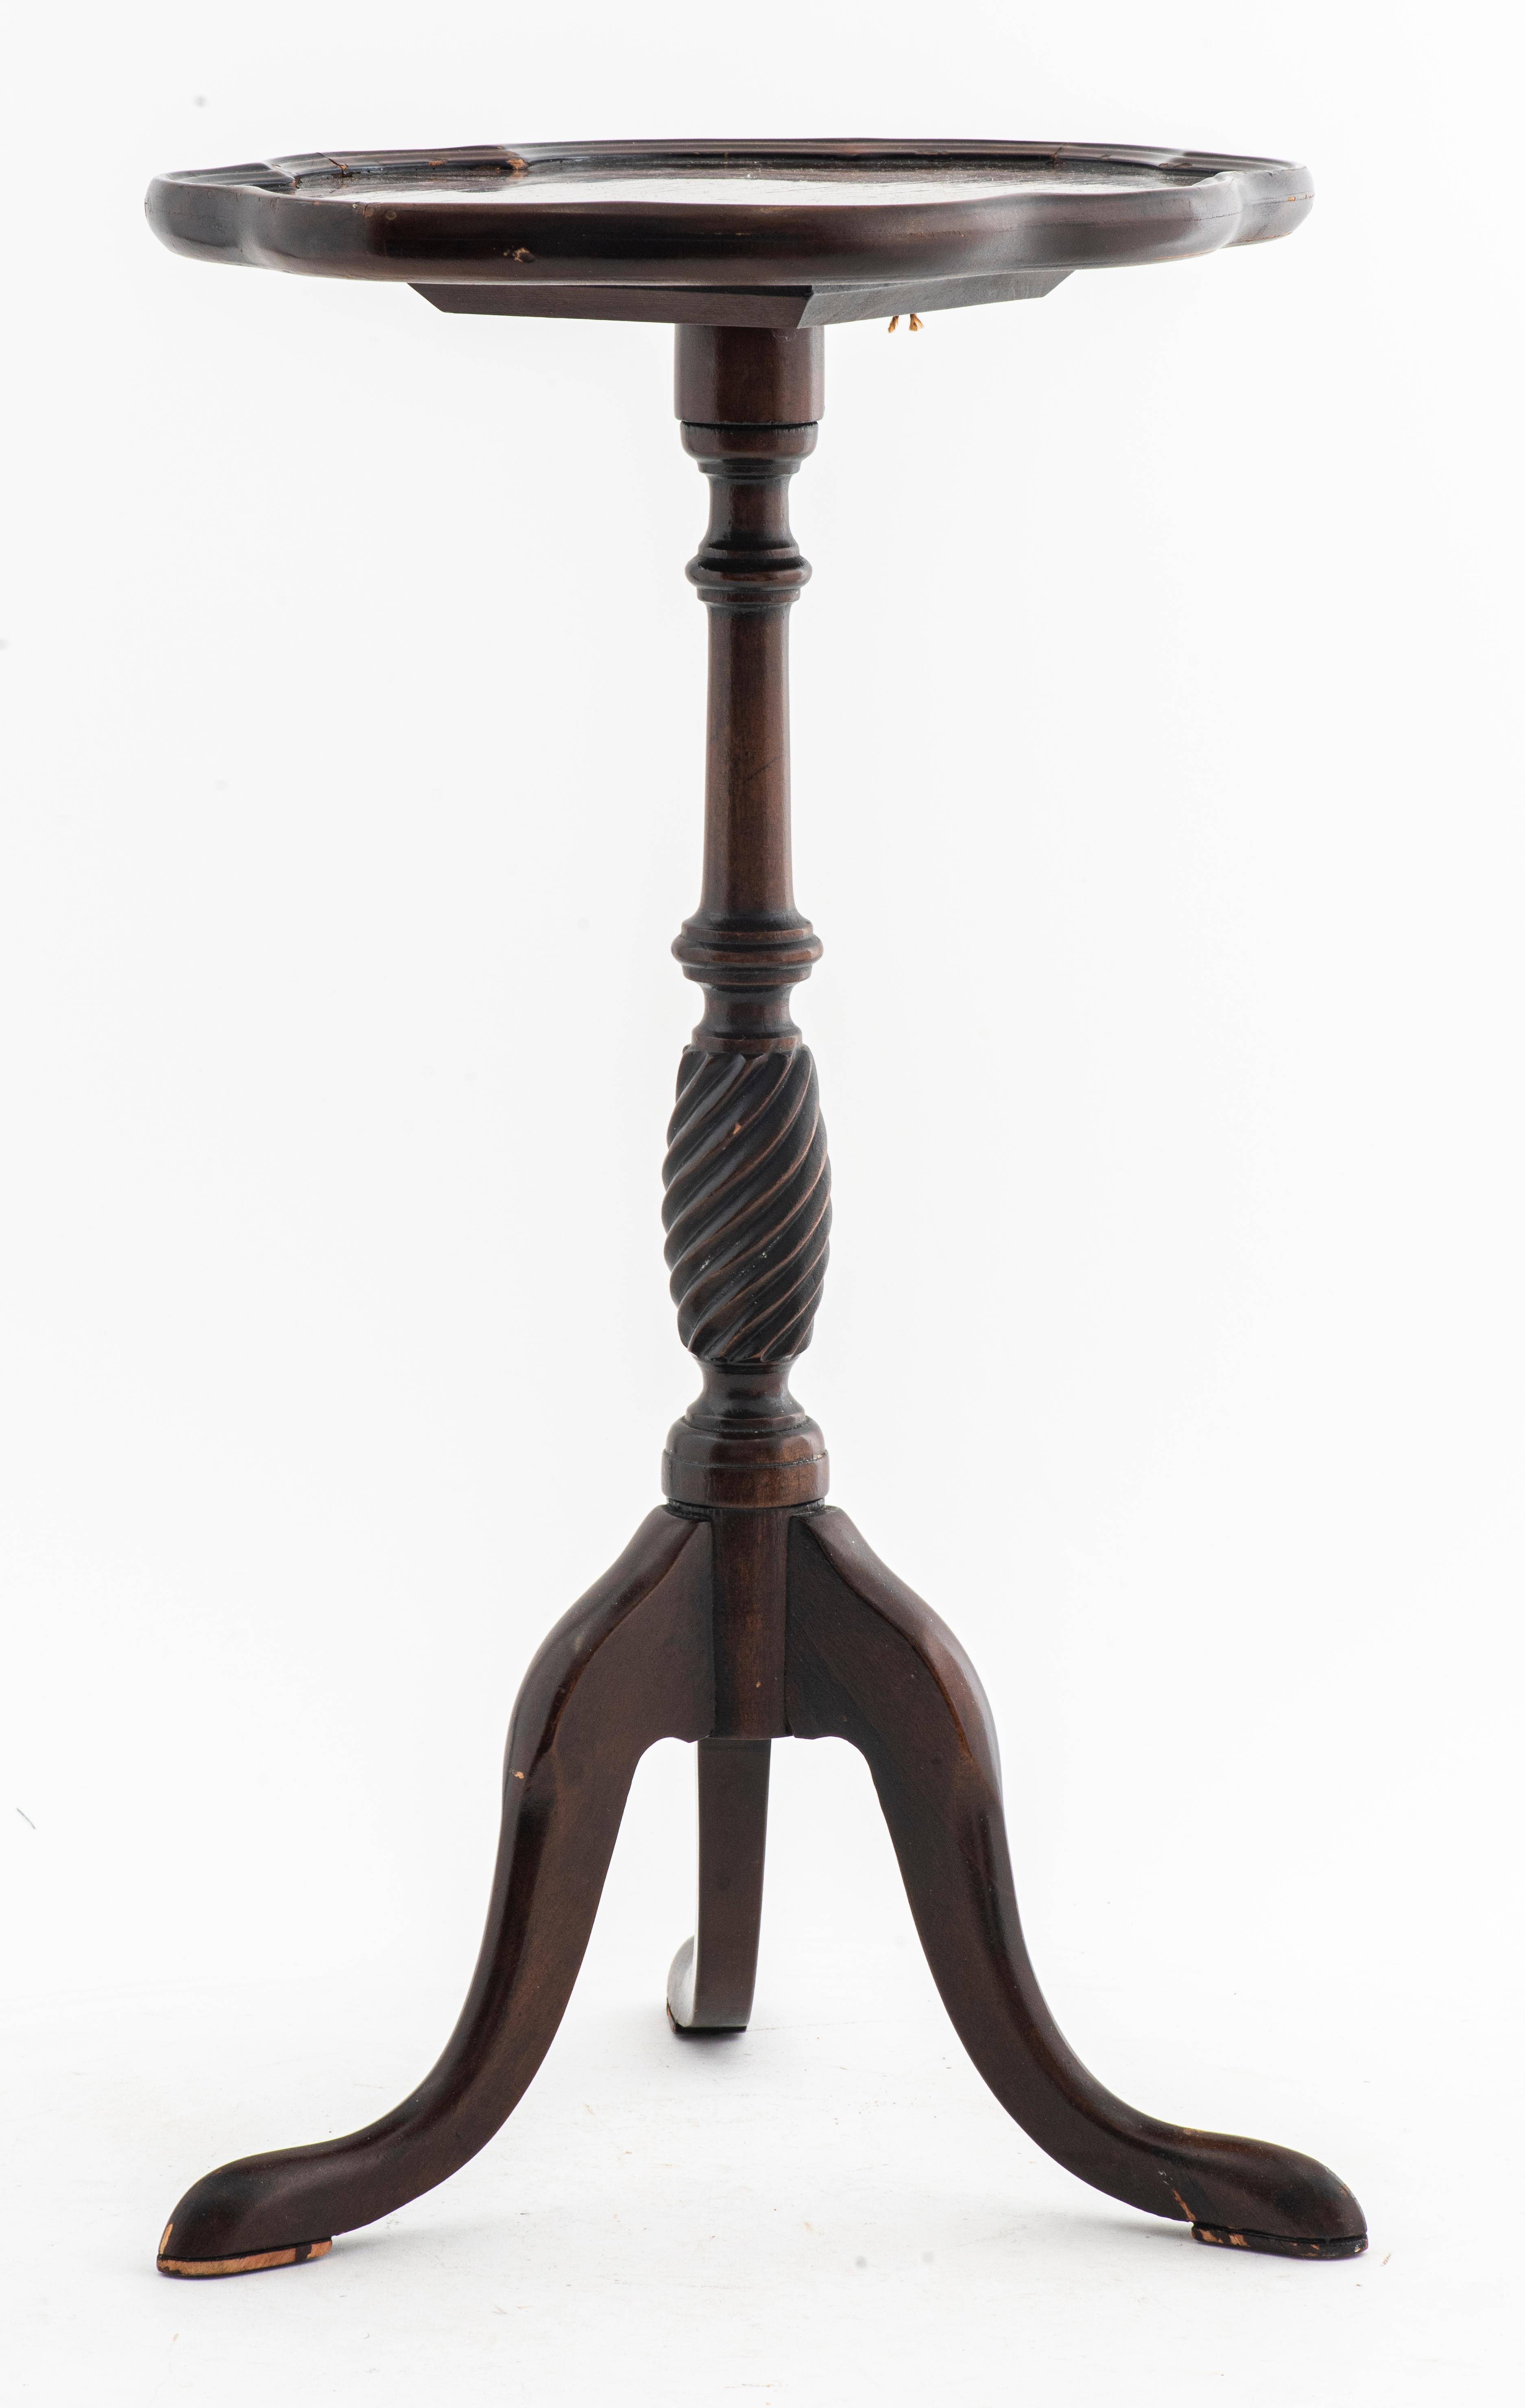 Carved Brandt Queen Anne Manner Diminutive Side Table